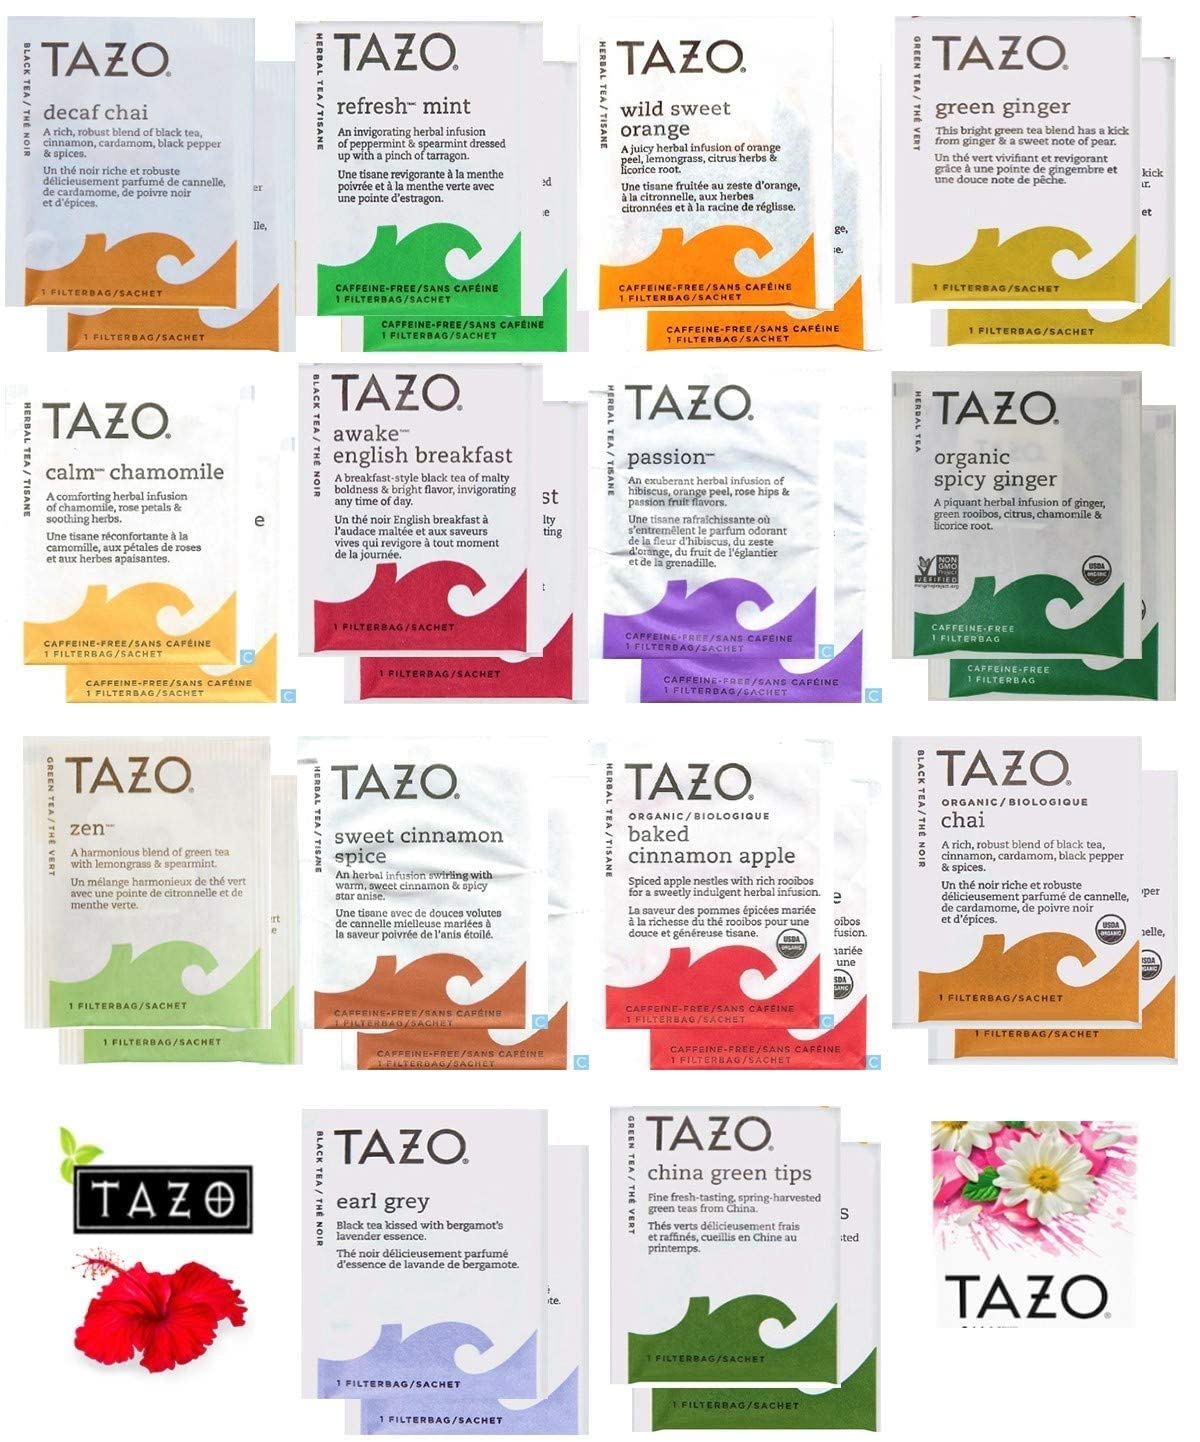 Tazo Tea Bags Sampler Assortment Box